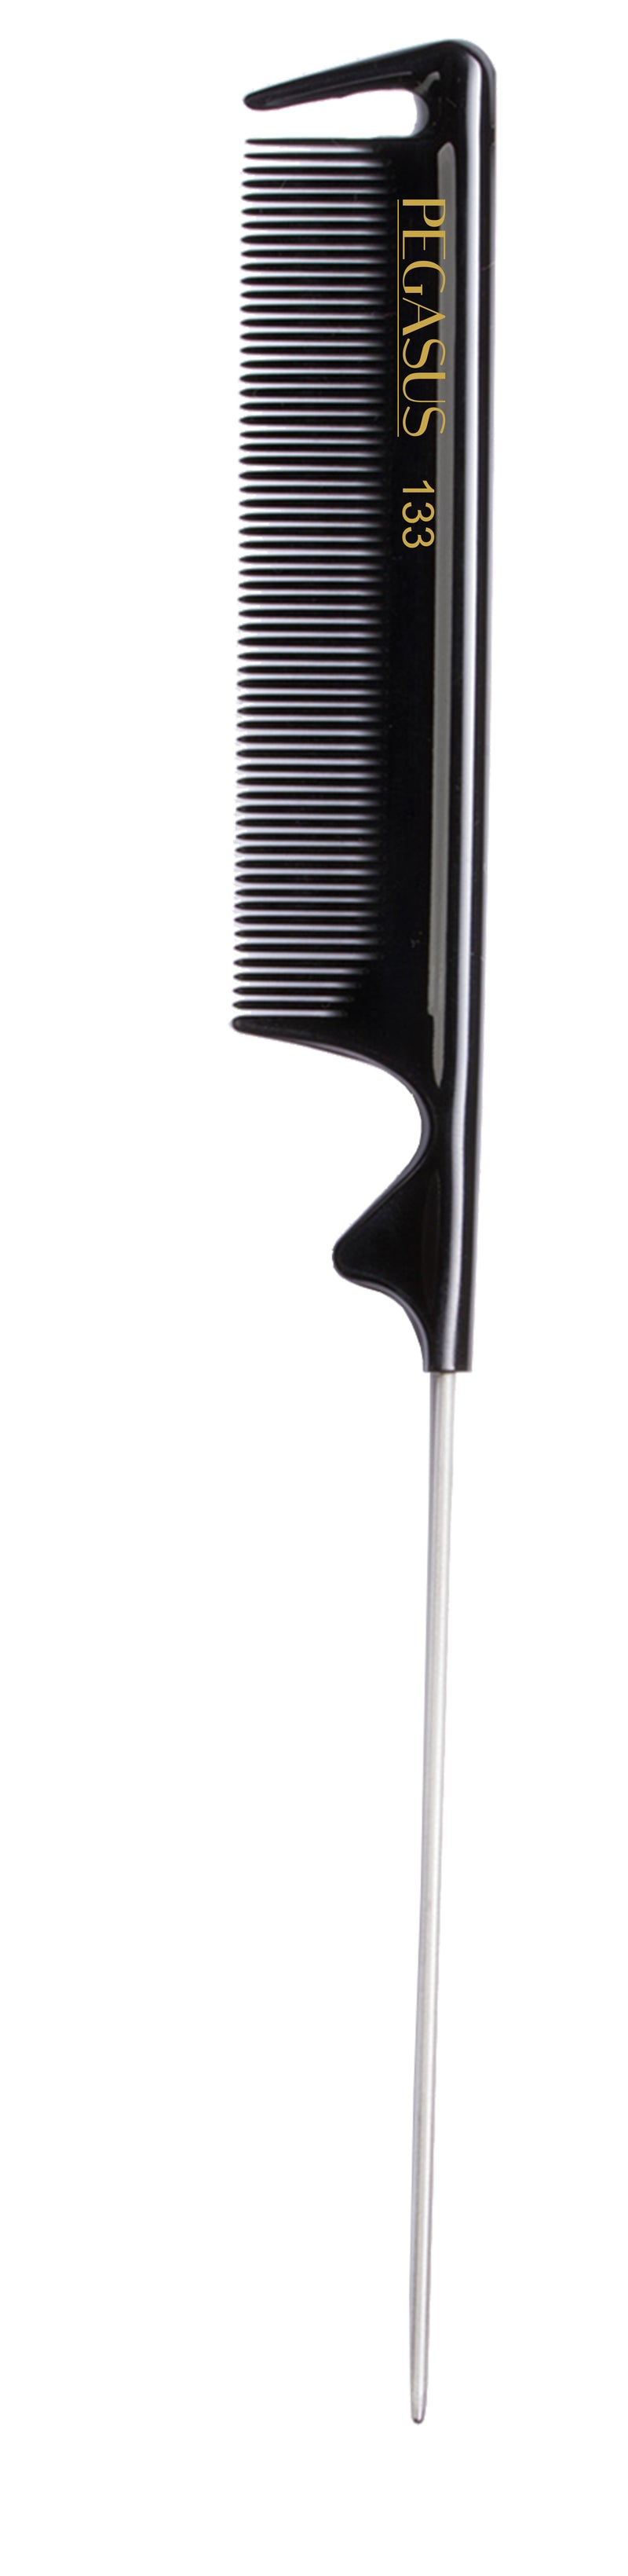 Pegasus Hard Rubber Comb (133) 9.75" Pin Tail Comb